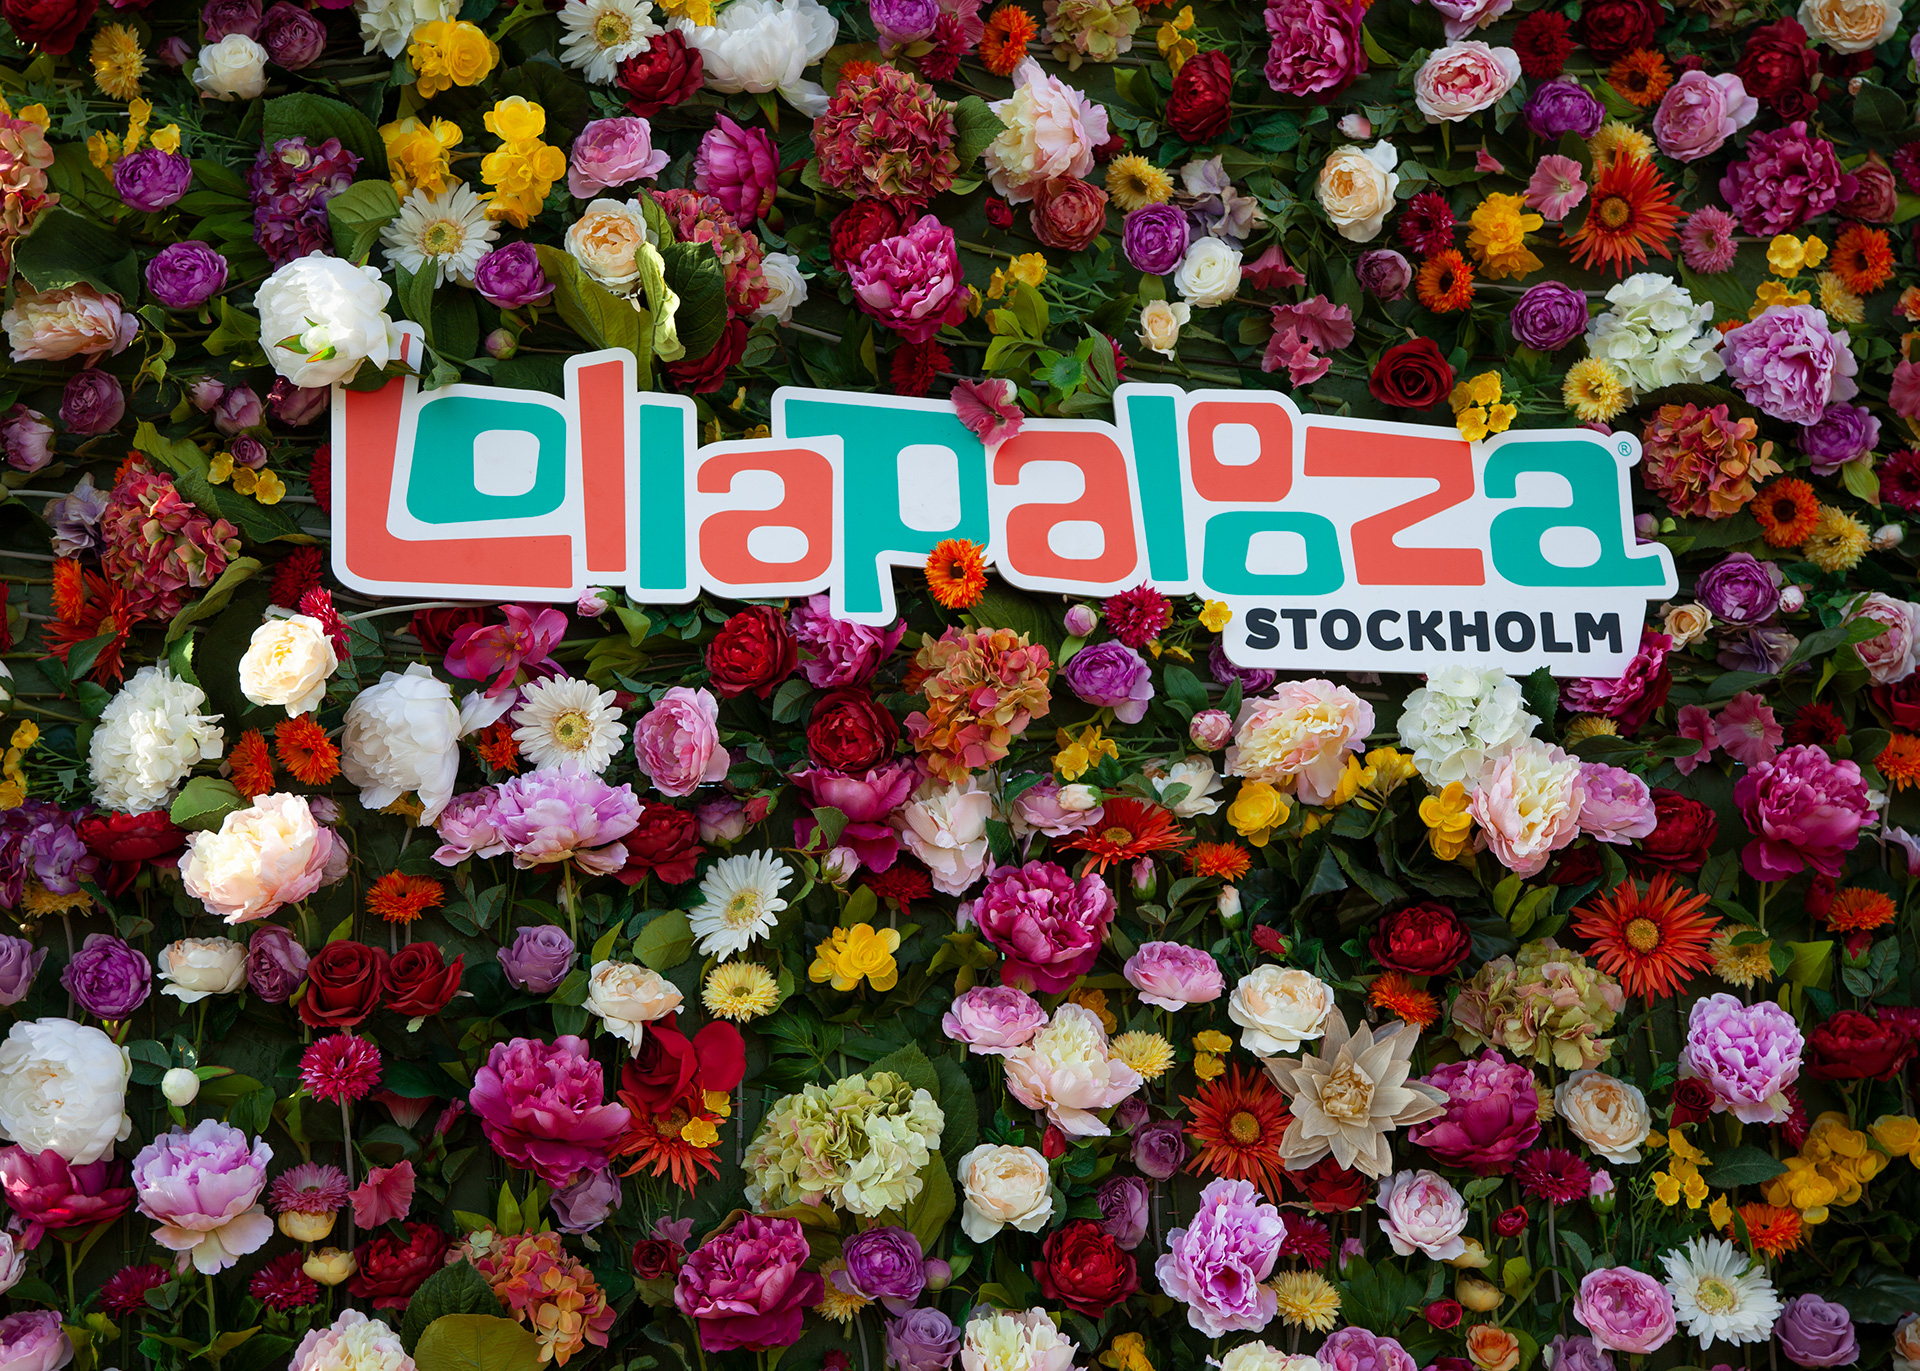 Lollapalooza Stockholm sign flowers